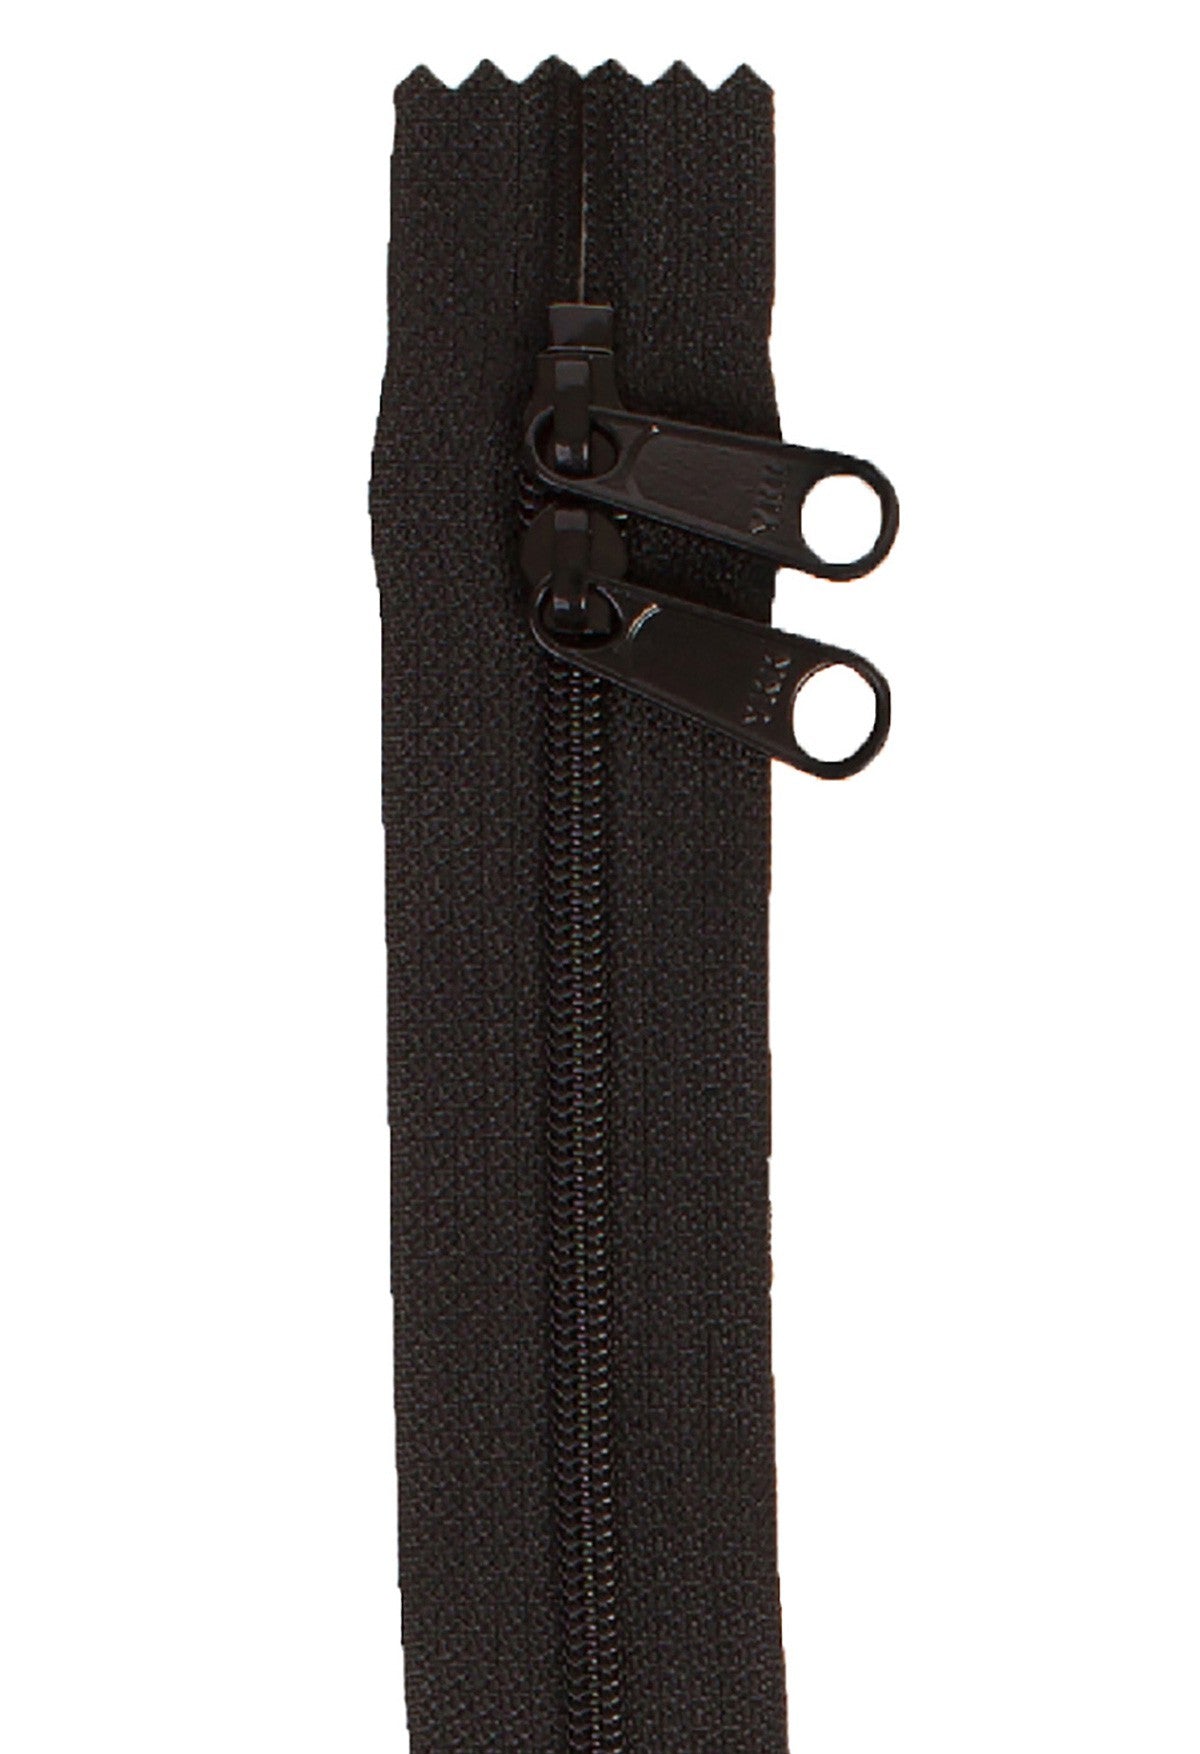 Handbag Zipper - Black  - 40" - 2 Pulls - by Annie